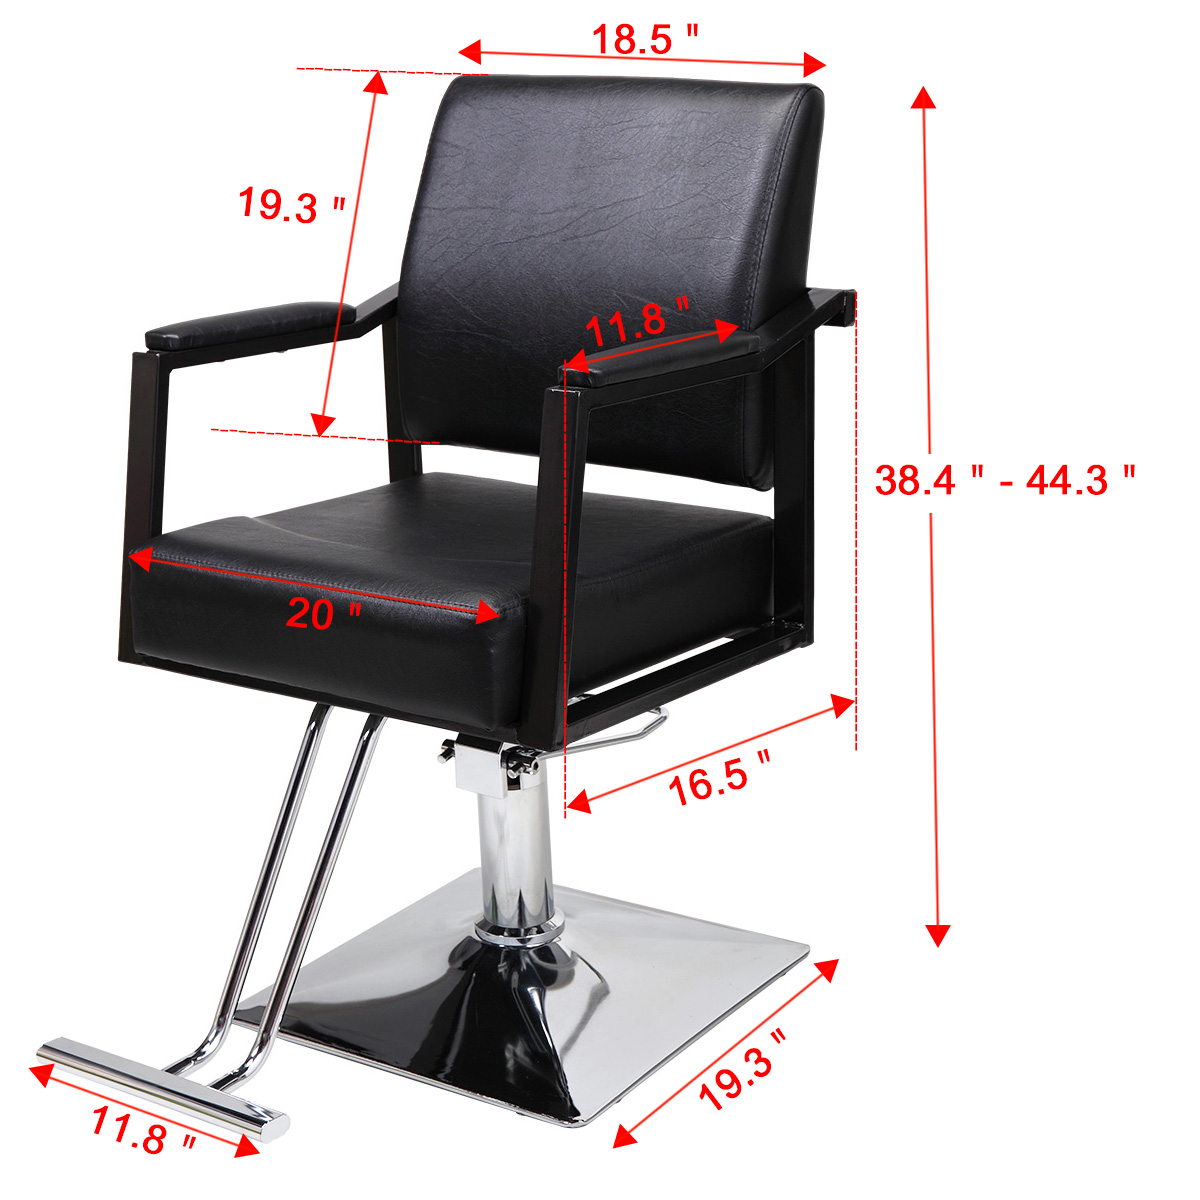 JAXPETY Beauty Salon Chair Hydraulic Barber Salon Beauty Hair Styling Chair Equipment,Black